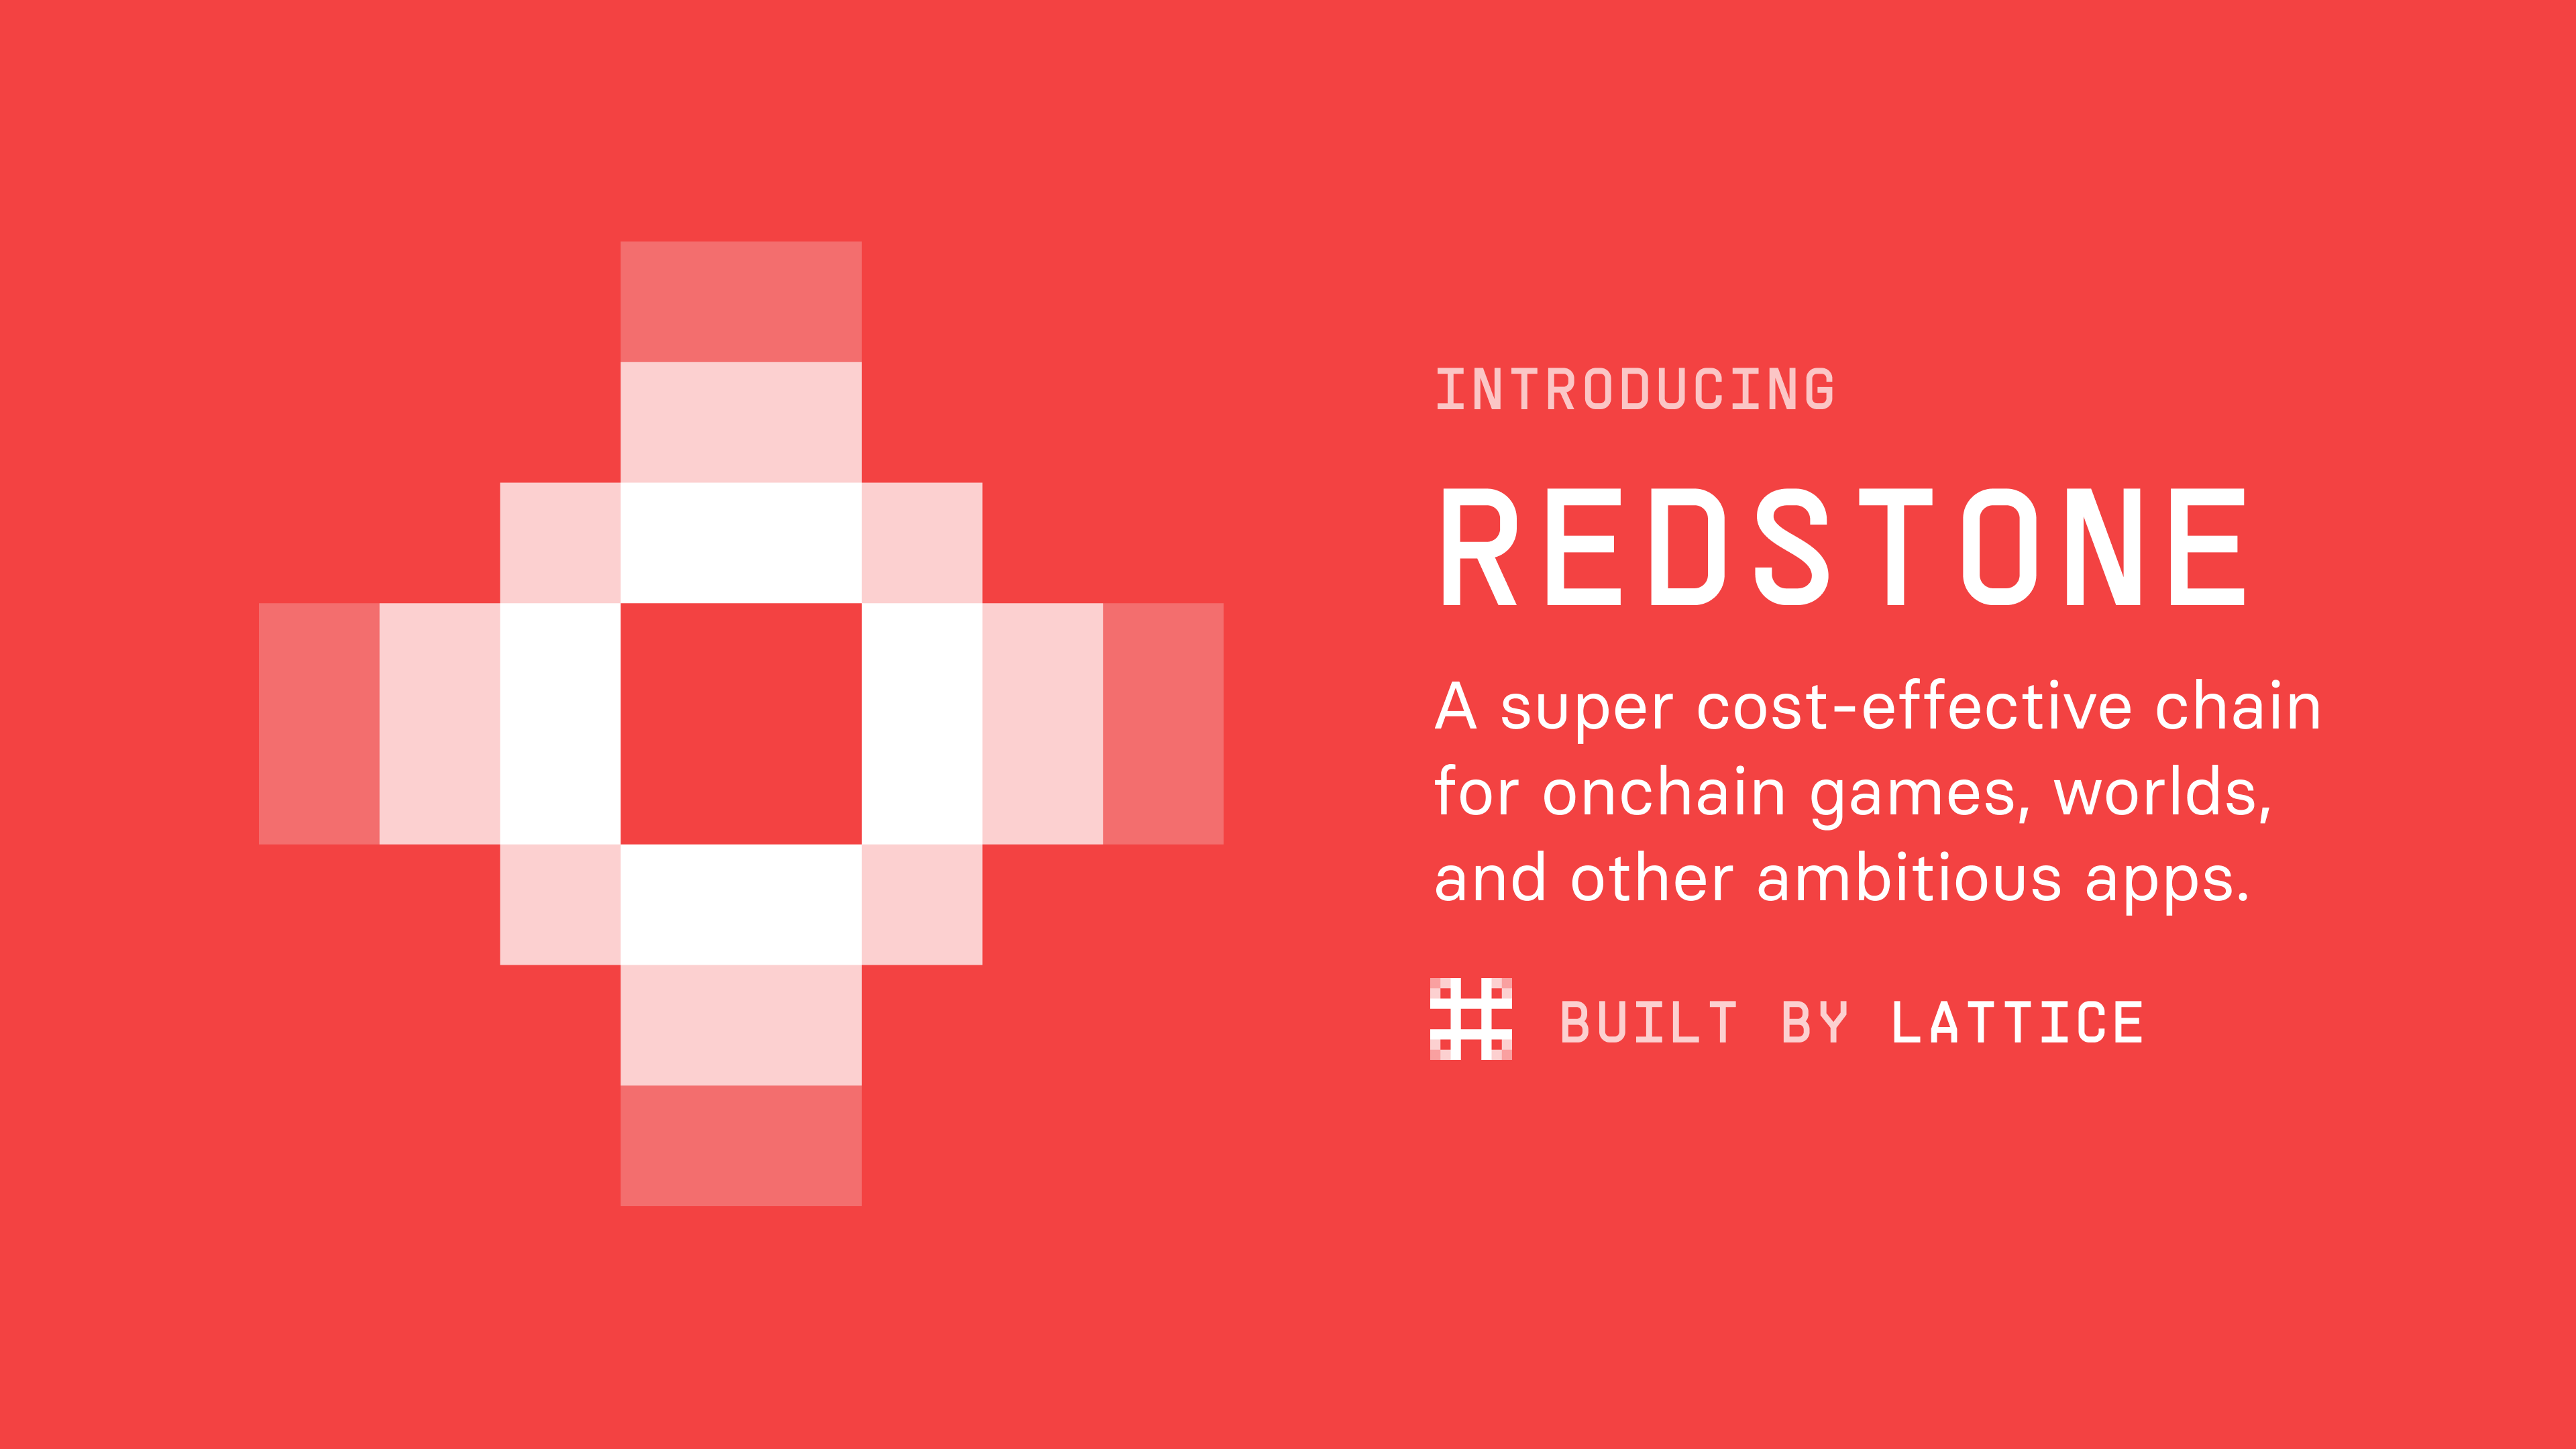 Introducing: Redstone